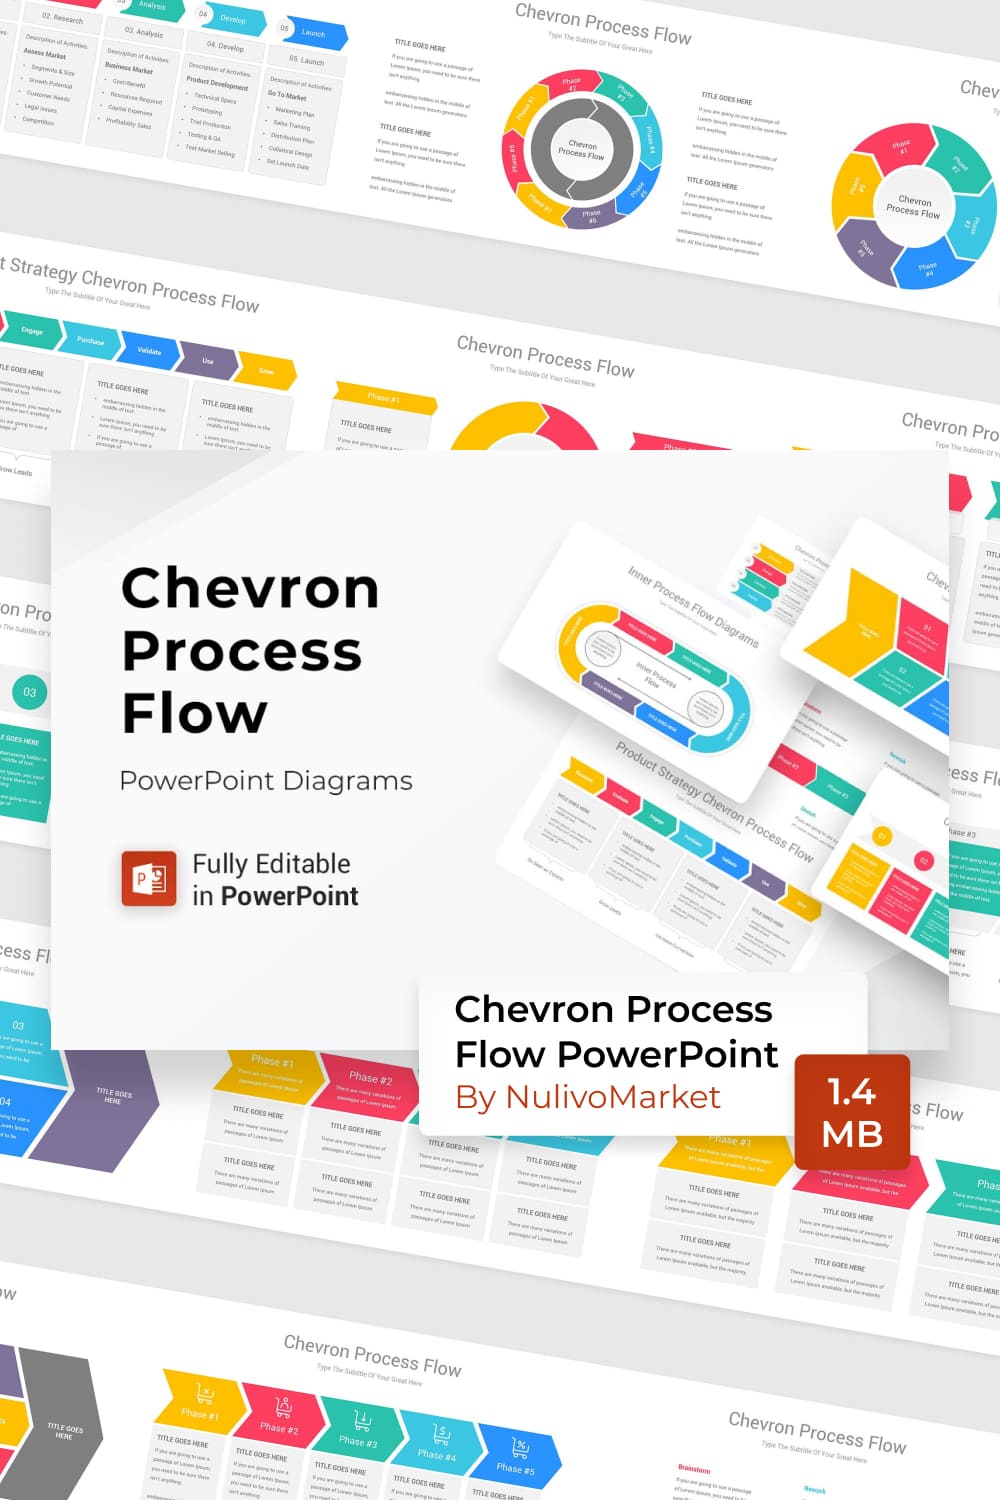 Chevron Process Flow PowerPoint by MasterBundles Pinterest Collage Image.